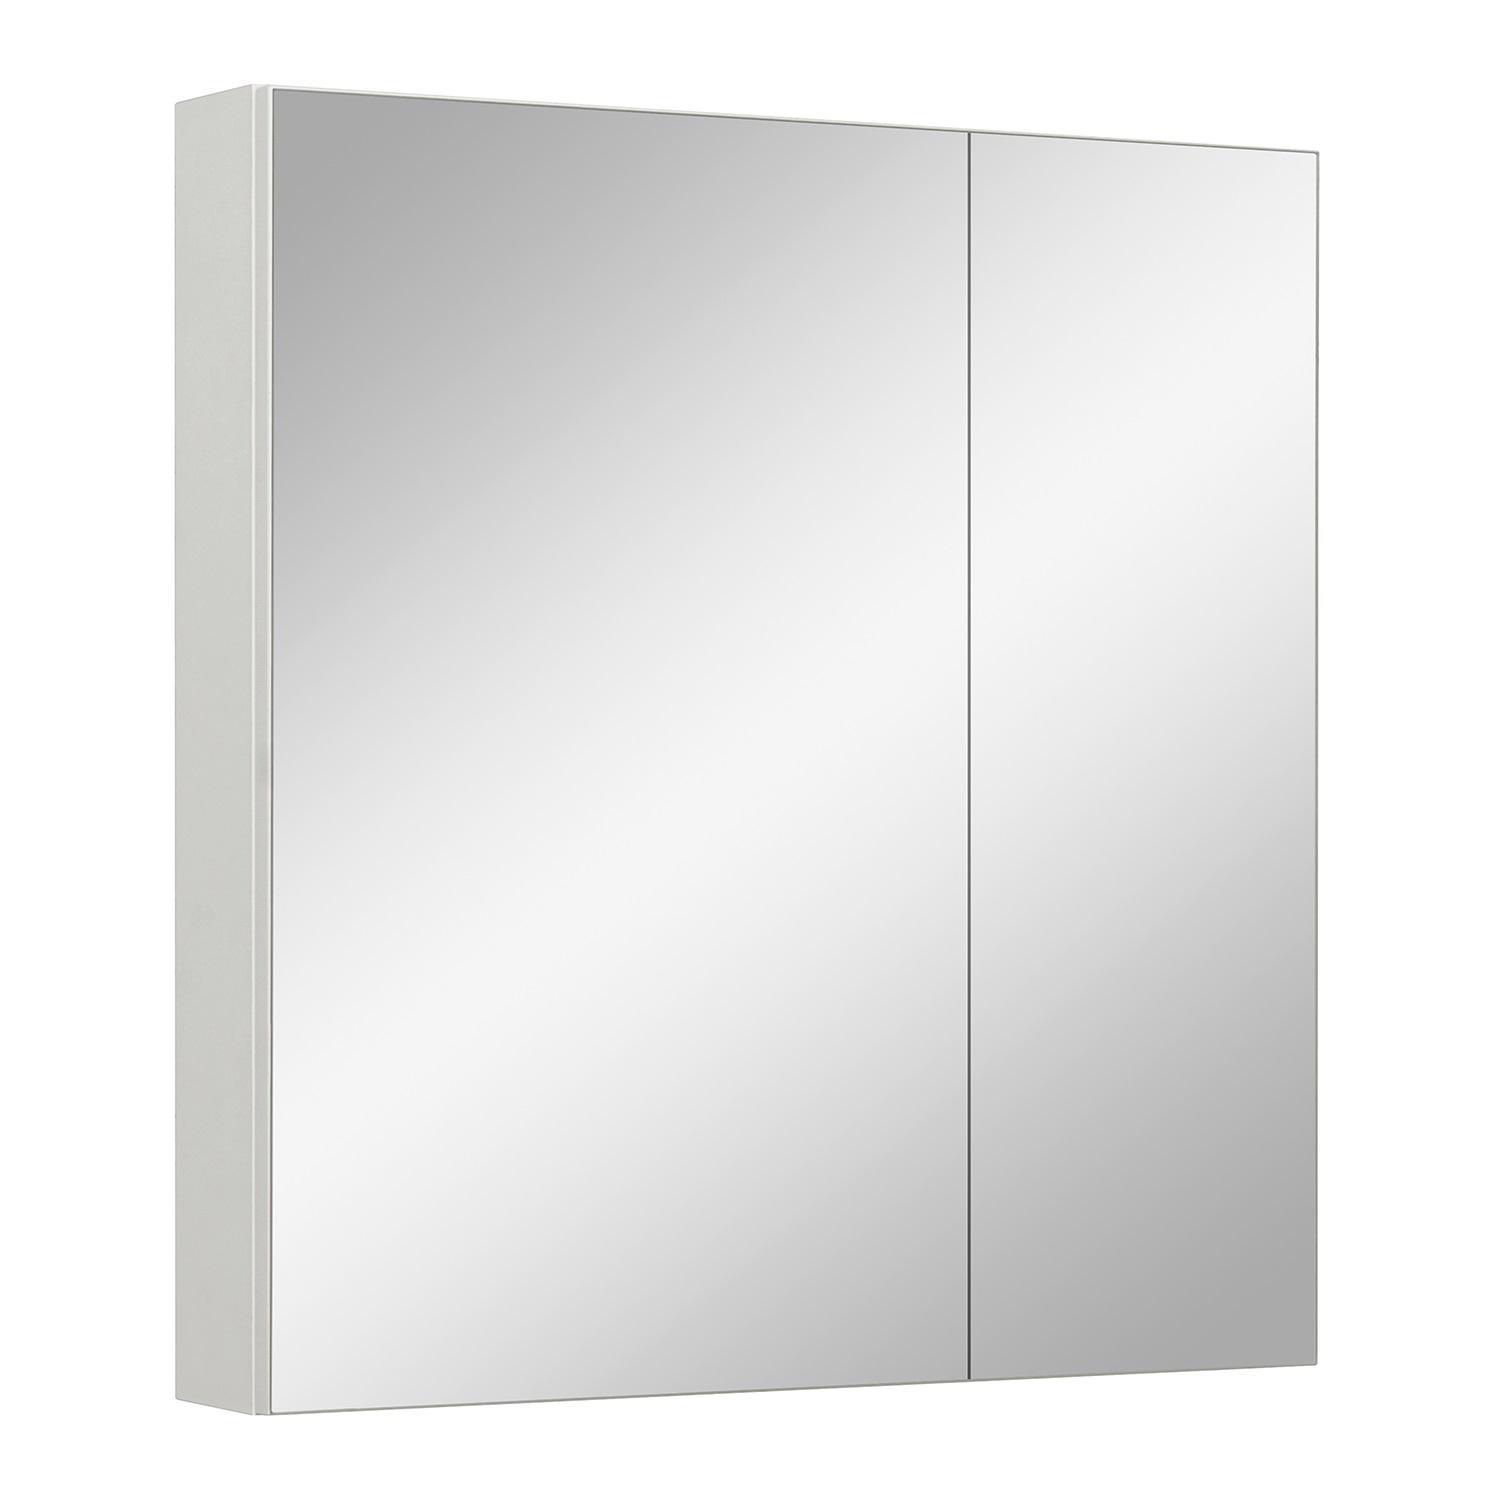 90451188 Зеркальный шкаф 65х60 см белый универсальный Лада STLM-0227520 RUNO